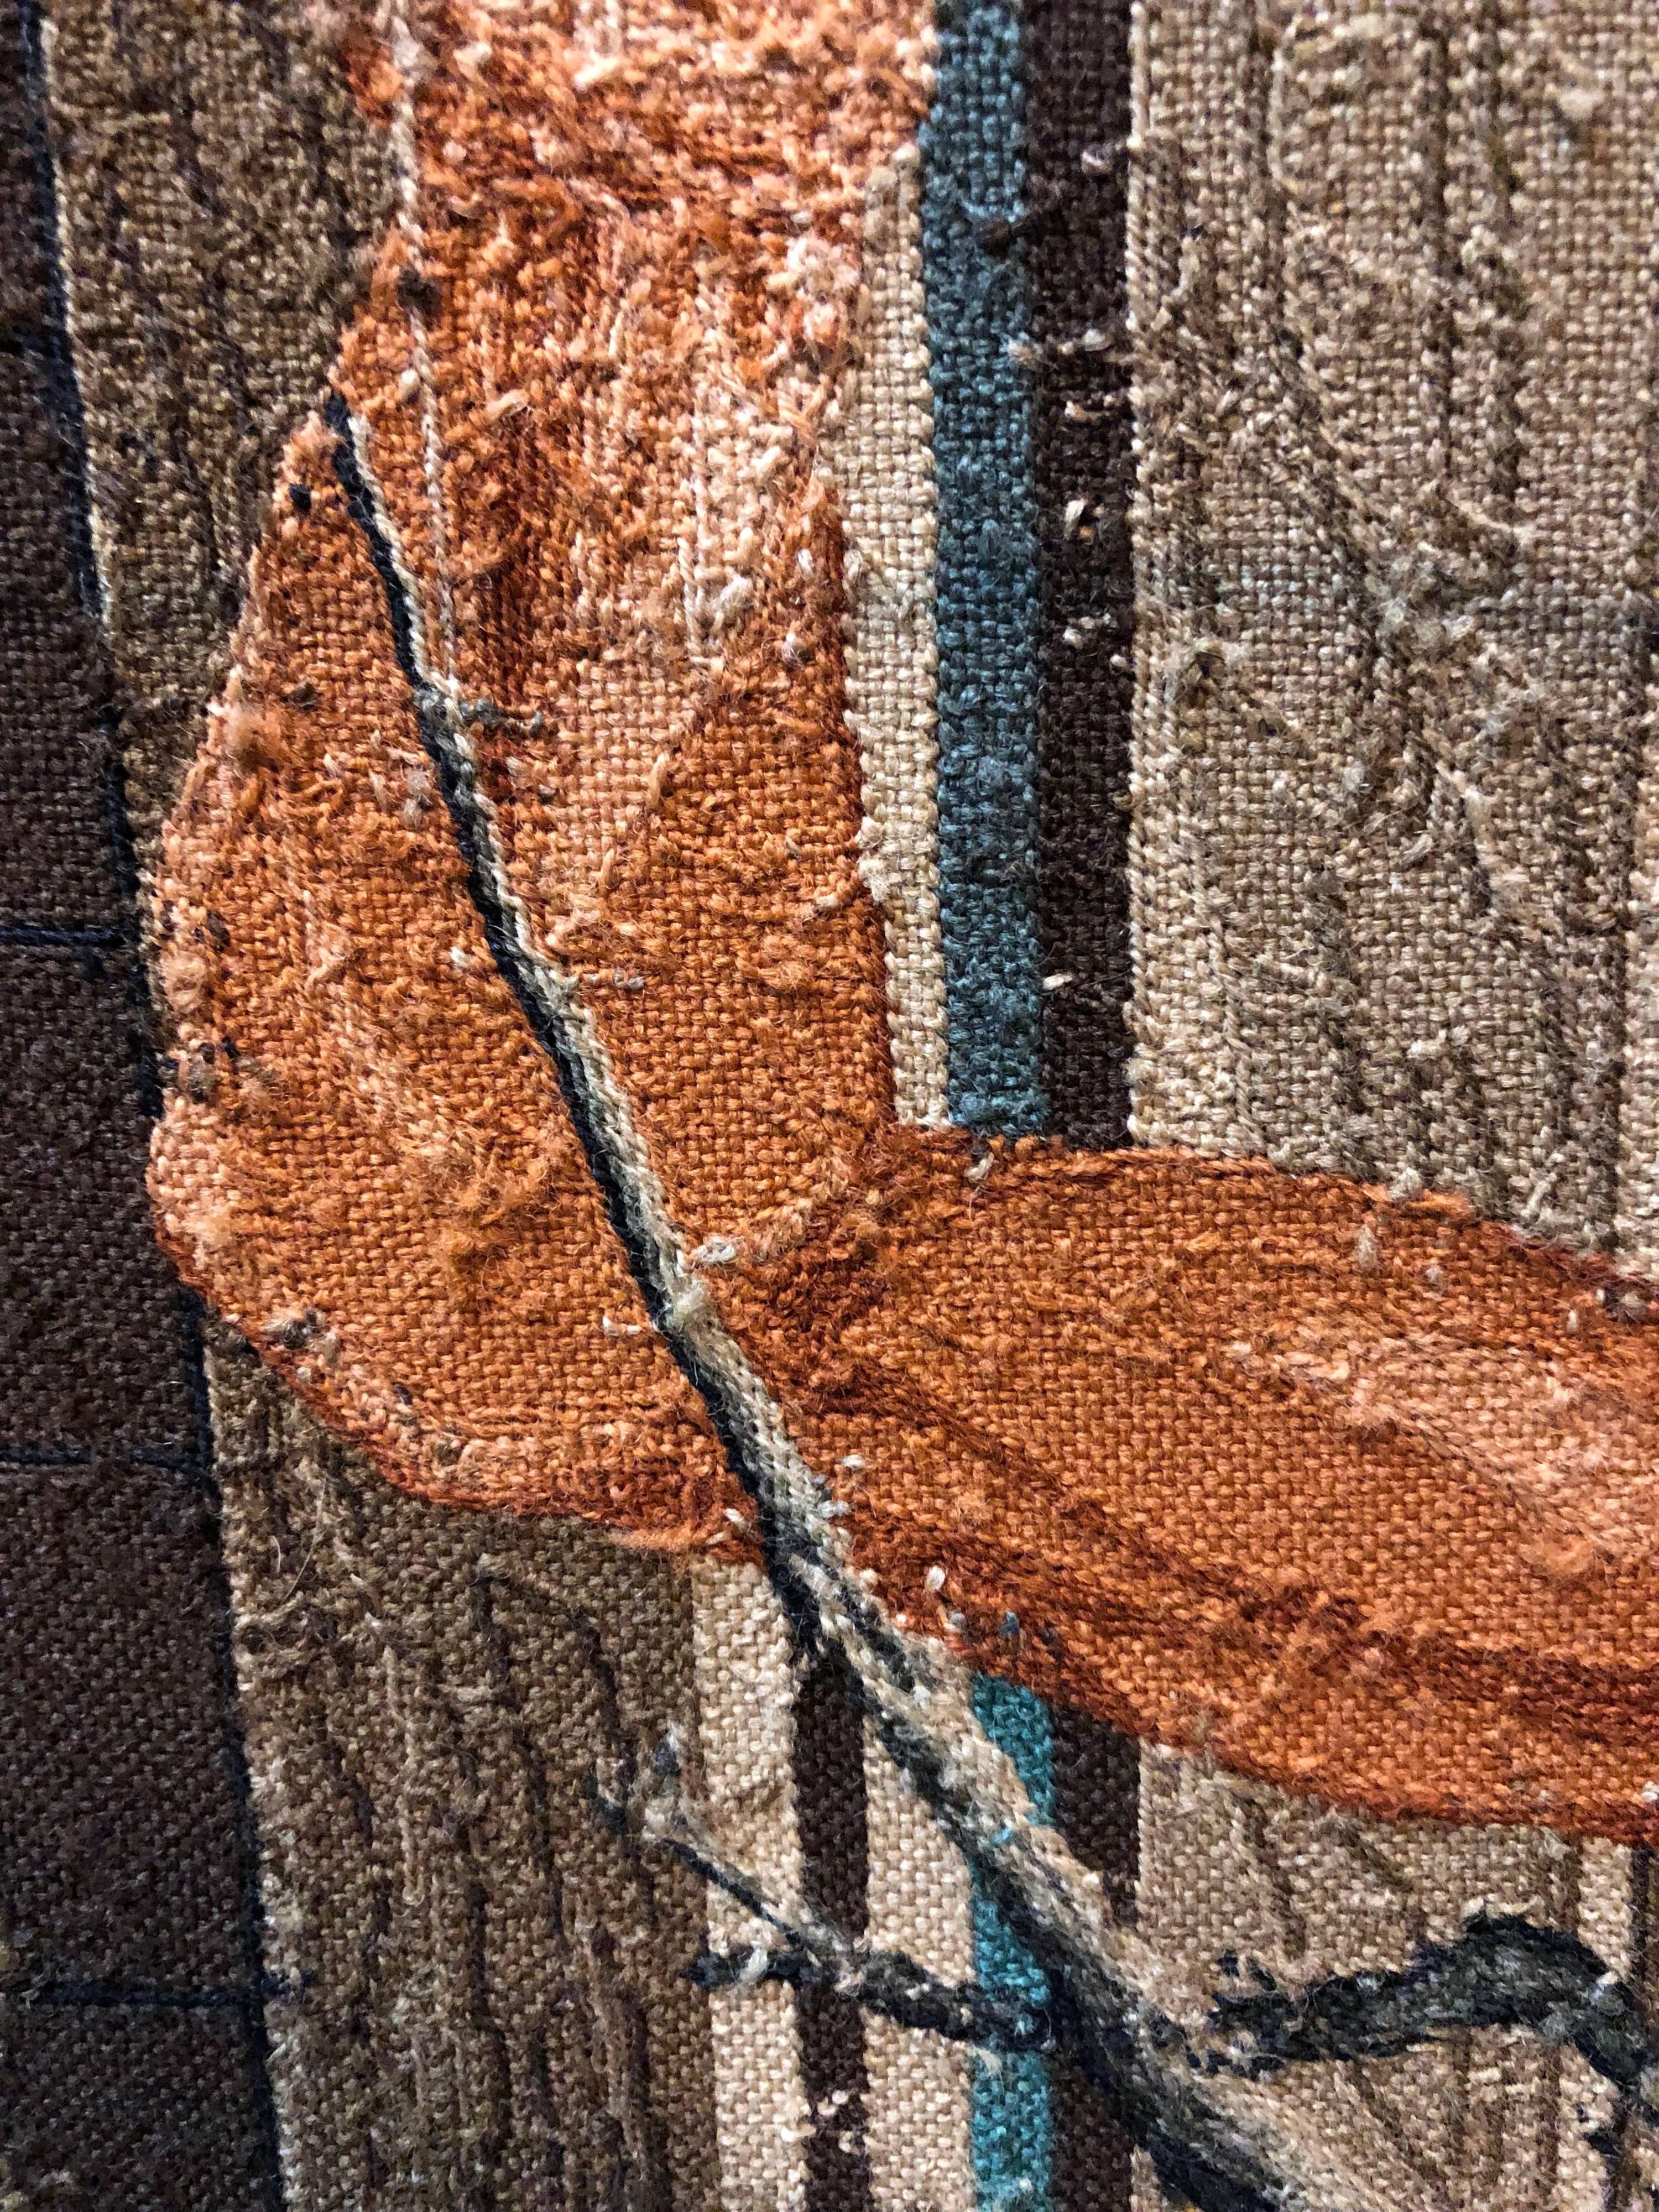 Louis Gartner Petit Point Needlework Tapestry after Paul Cadmus THE INVENTOR 2